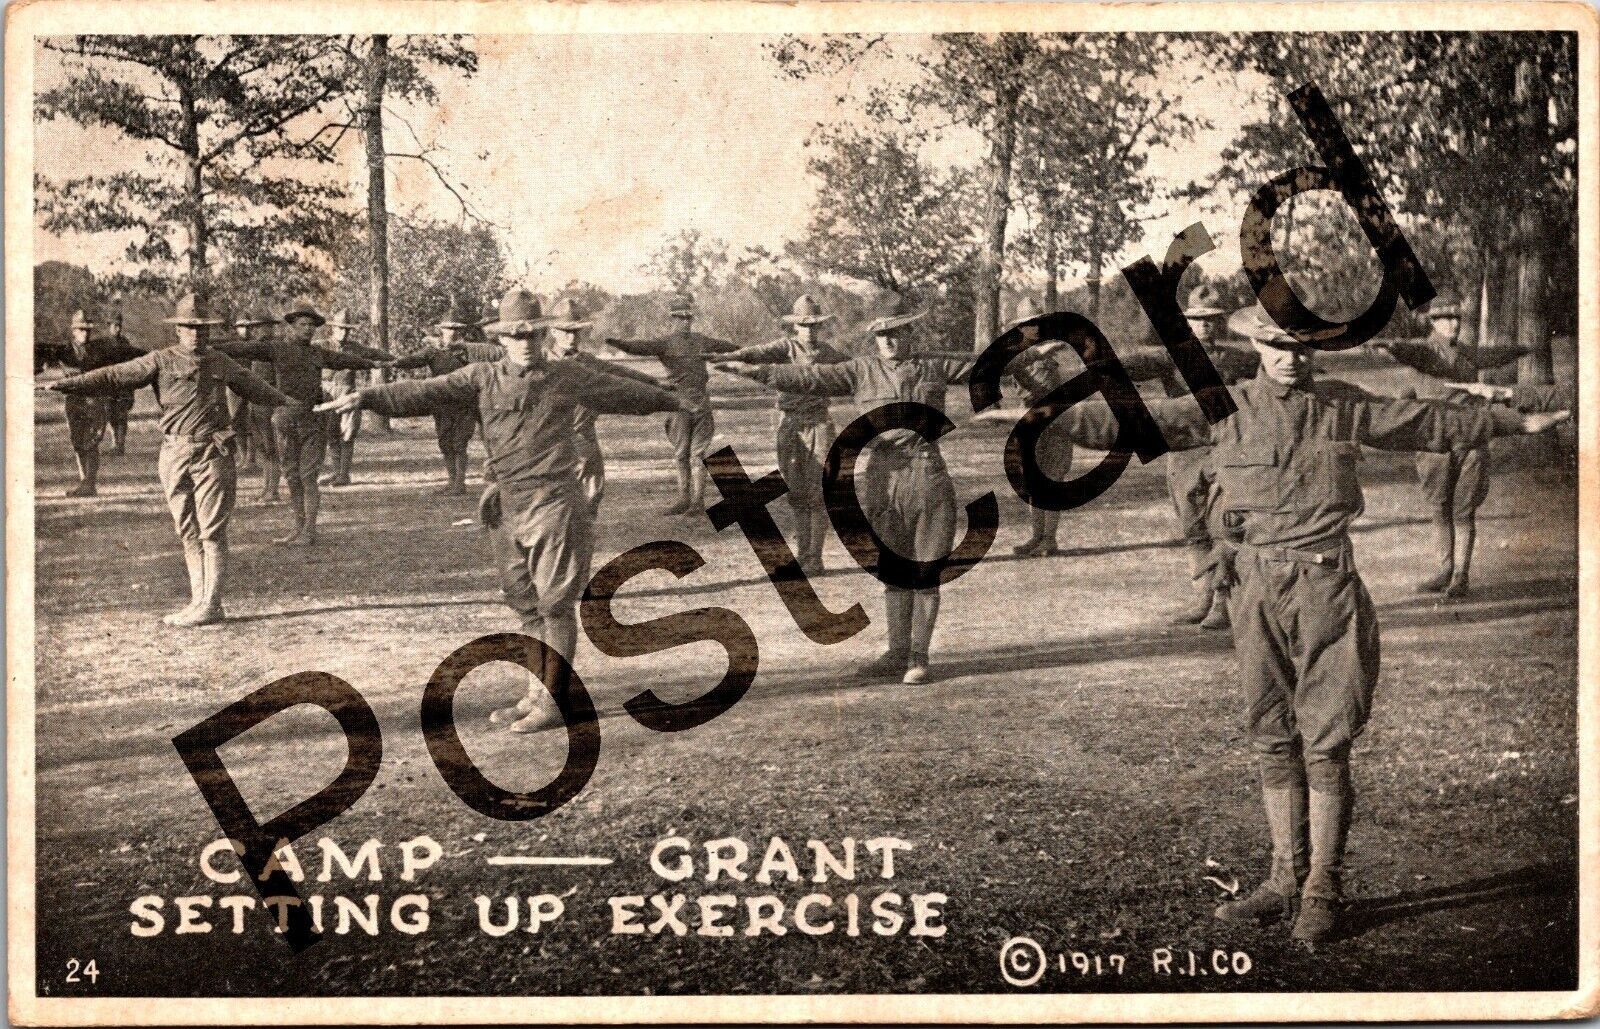 1917 CAMP GRANT, EXERCISE, Rockford, The Photo Postcard Co postcard jj195